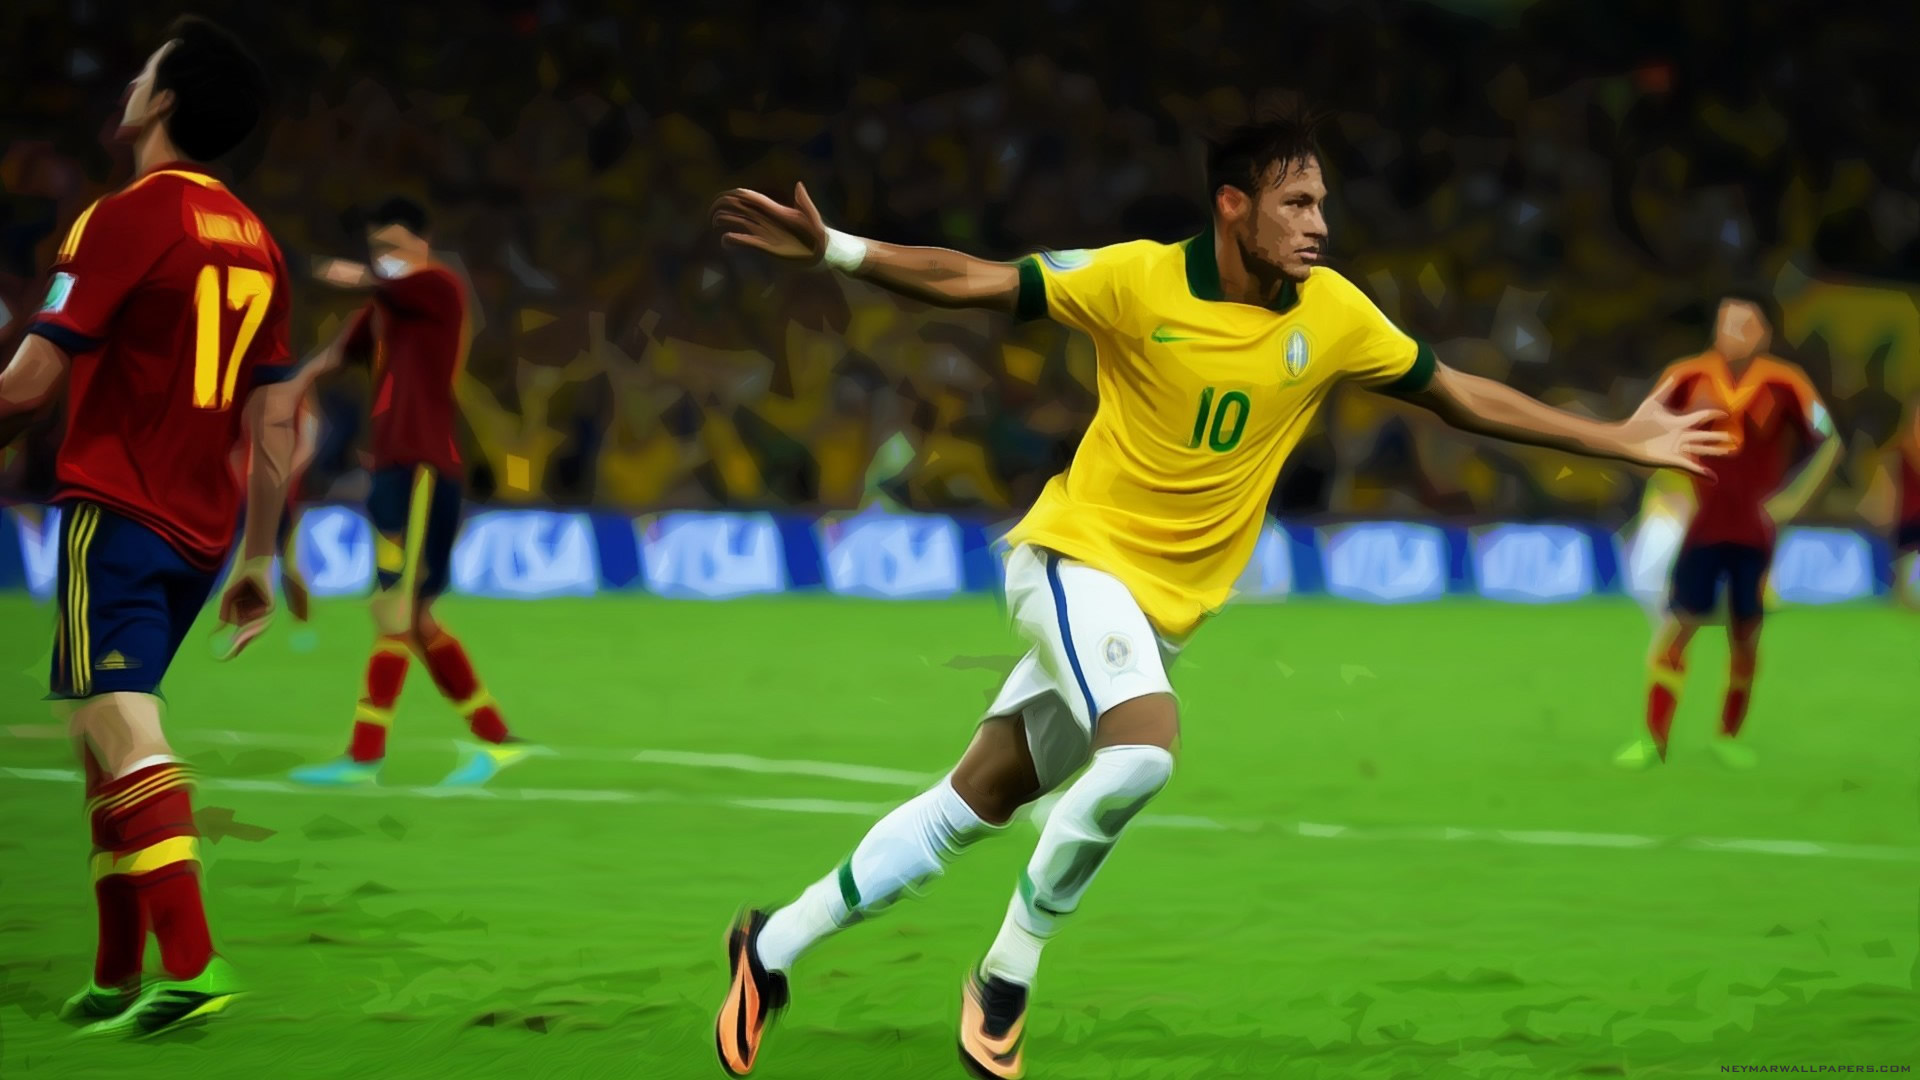 Neymar celebrating wallpaper (2)